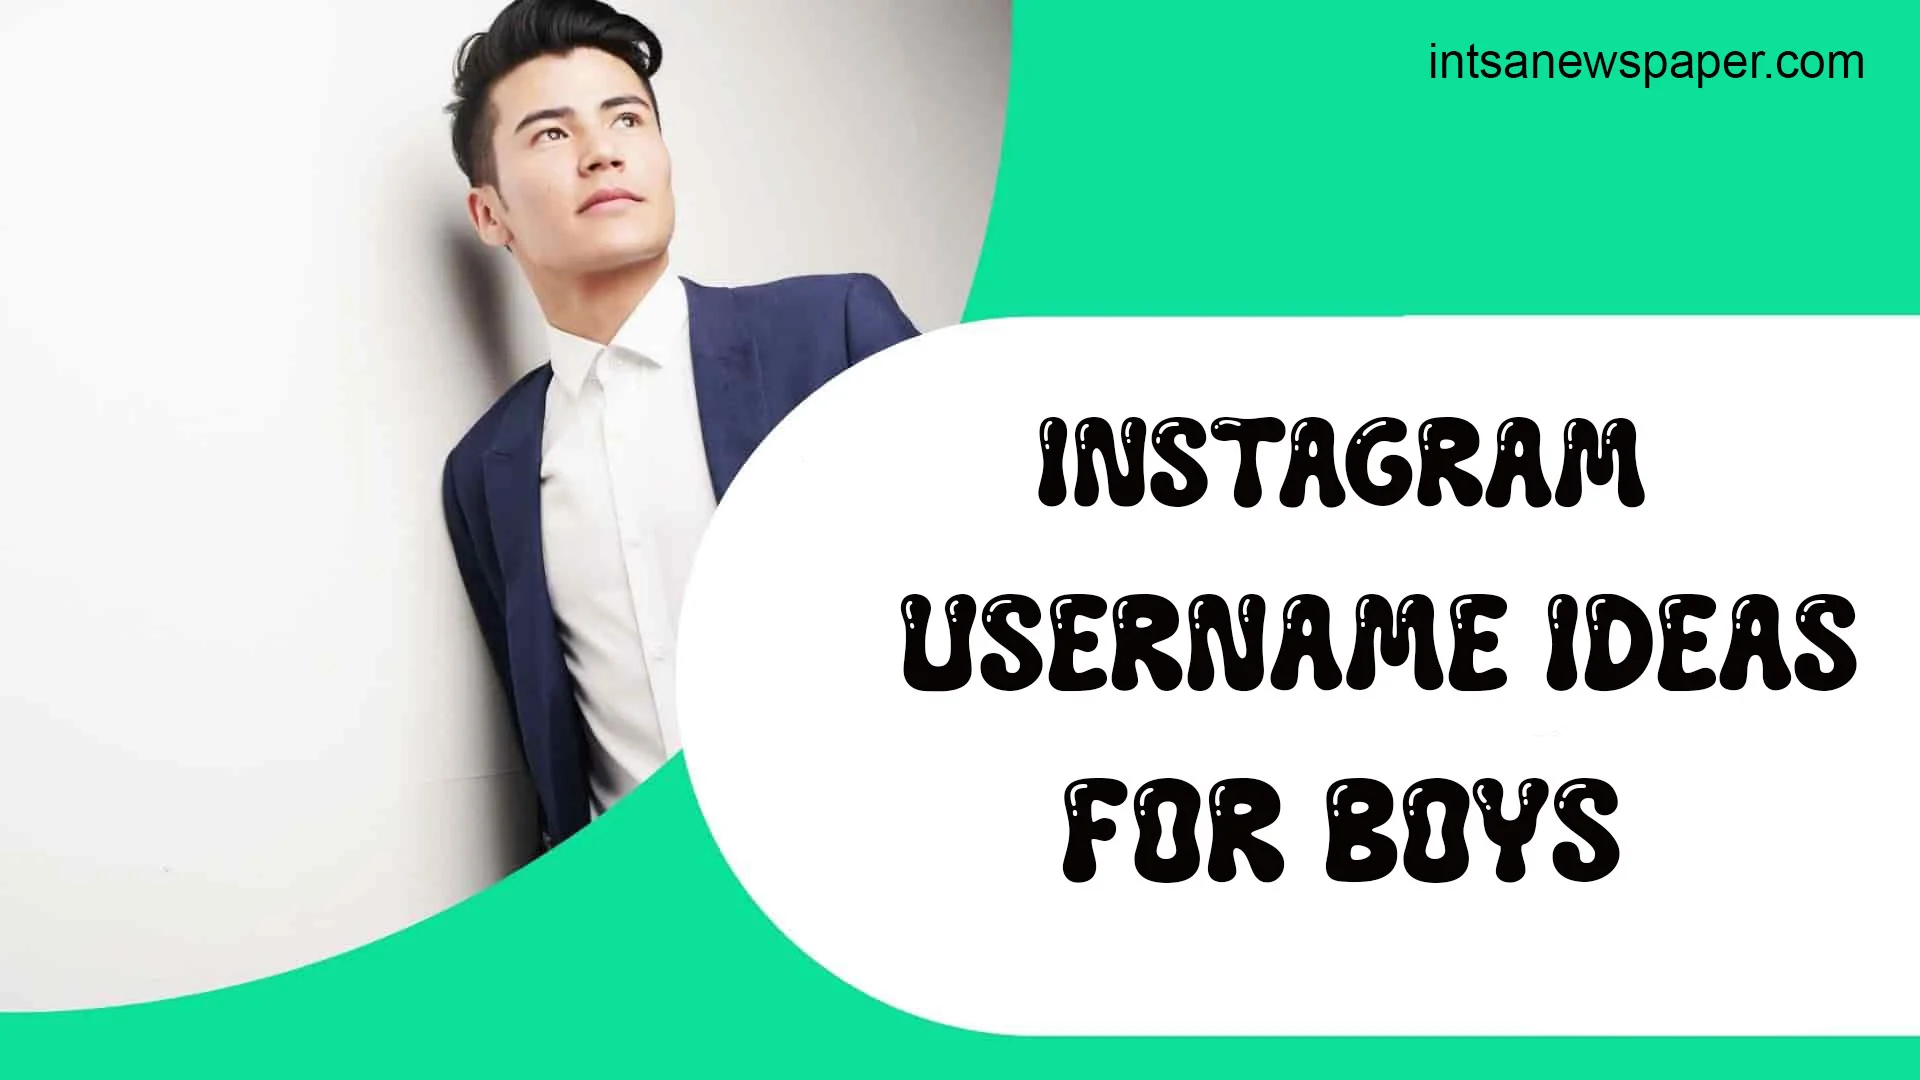 Instagram username ideas for boys